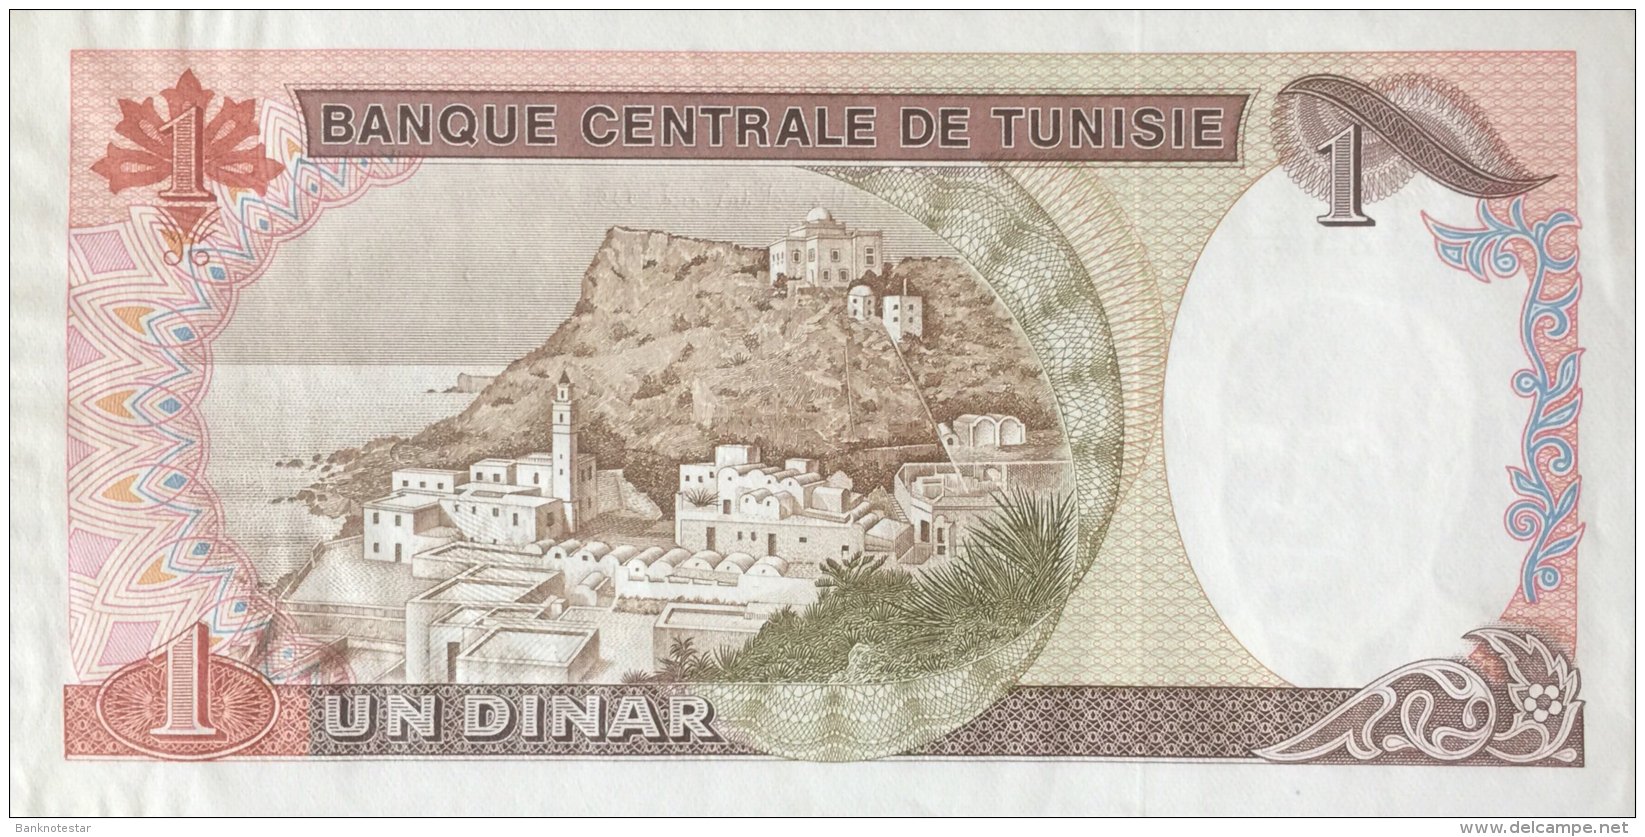 Tunisia 1 Dinar, P-74 (15.10.1980) - EF/XF - Tunesien